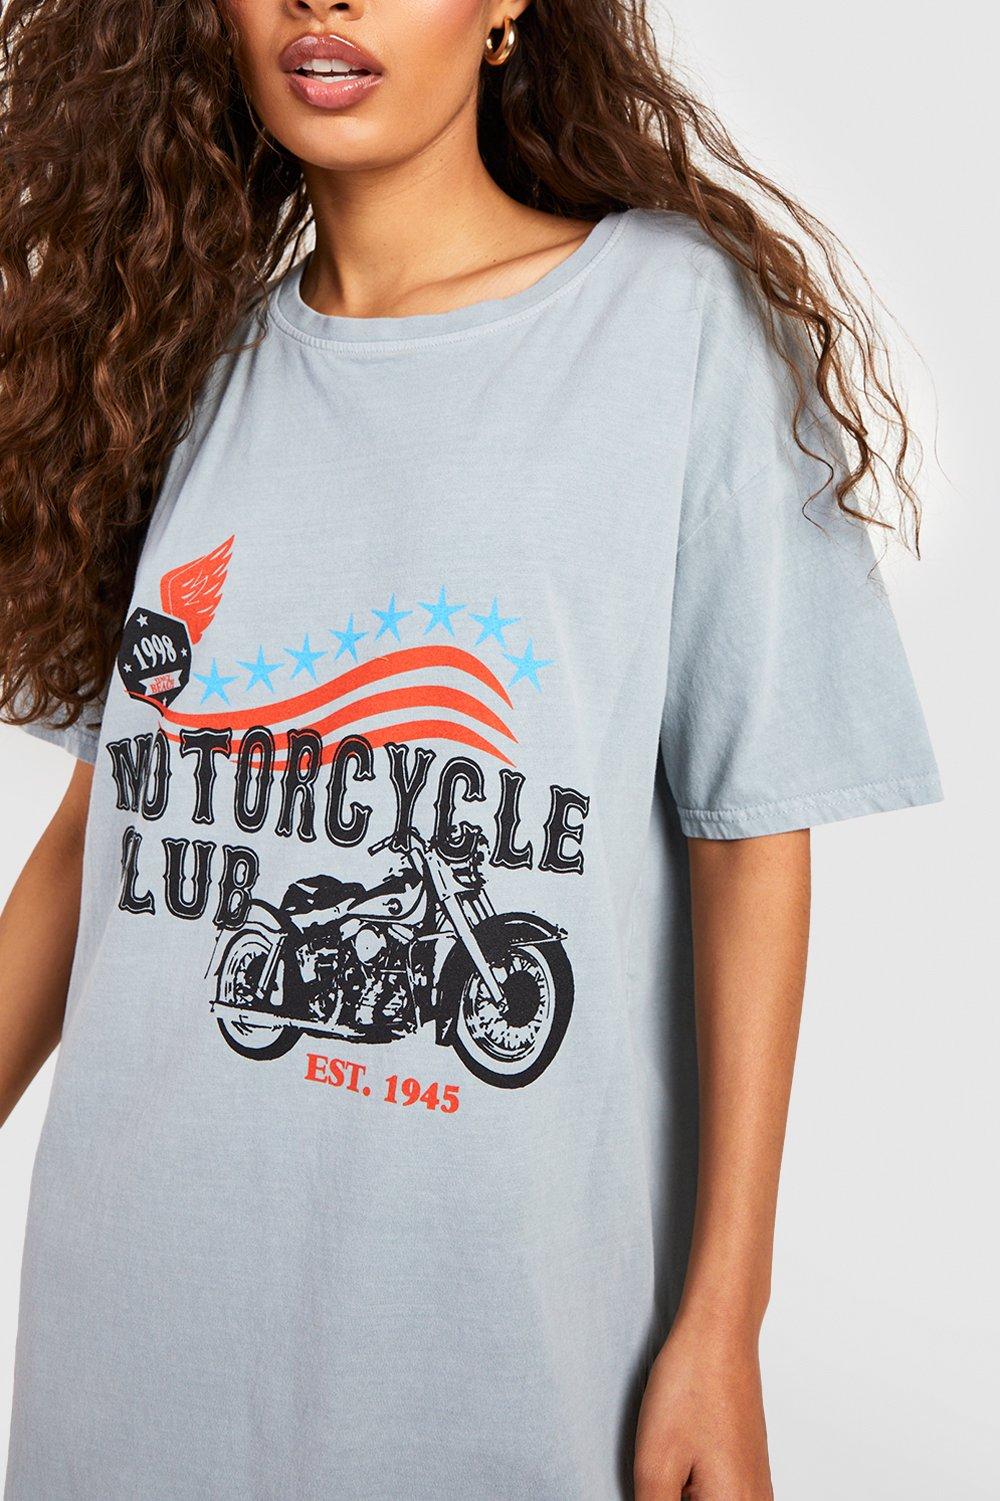 T-shirt moto femme chic